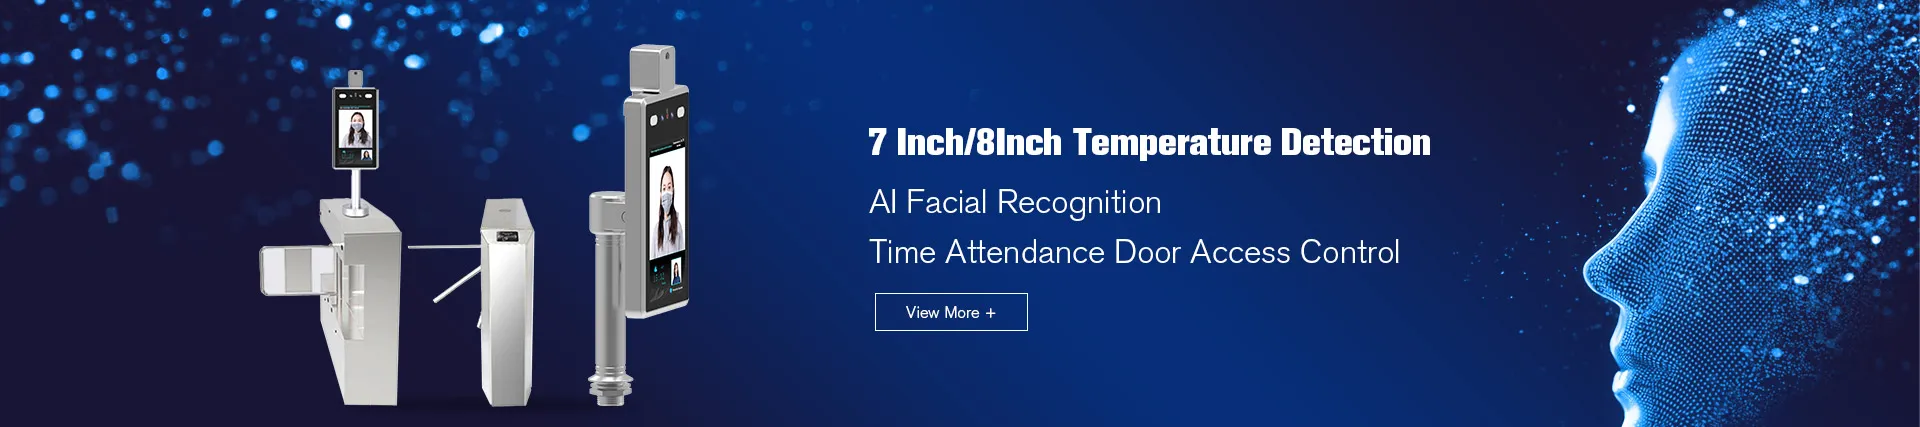 Temperature Detection AI Facial Recognition Device